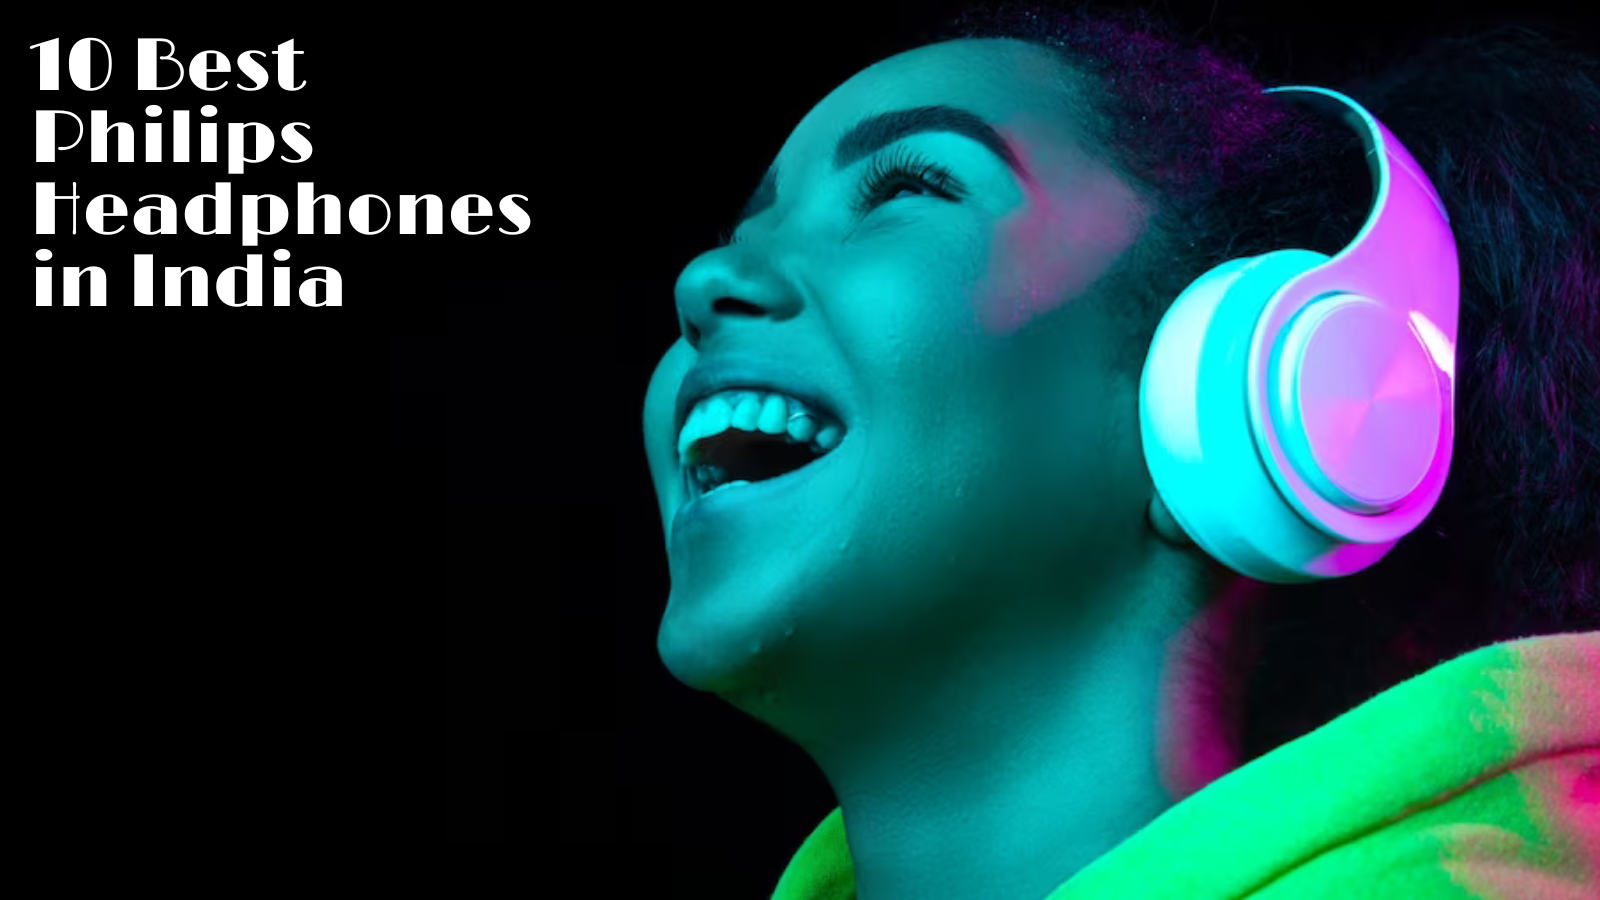 10 Best Philips Headphones in India